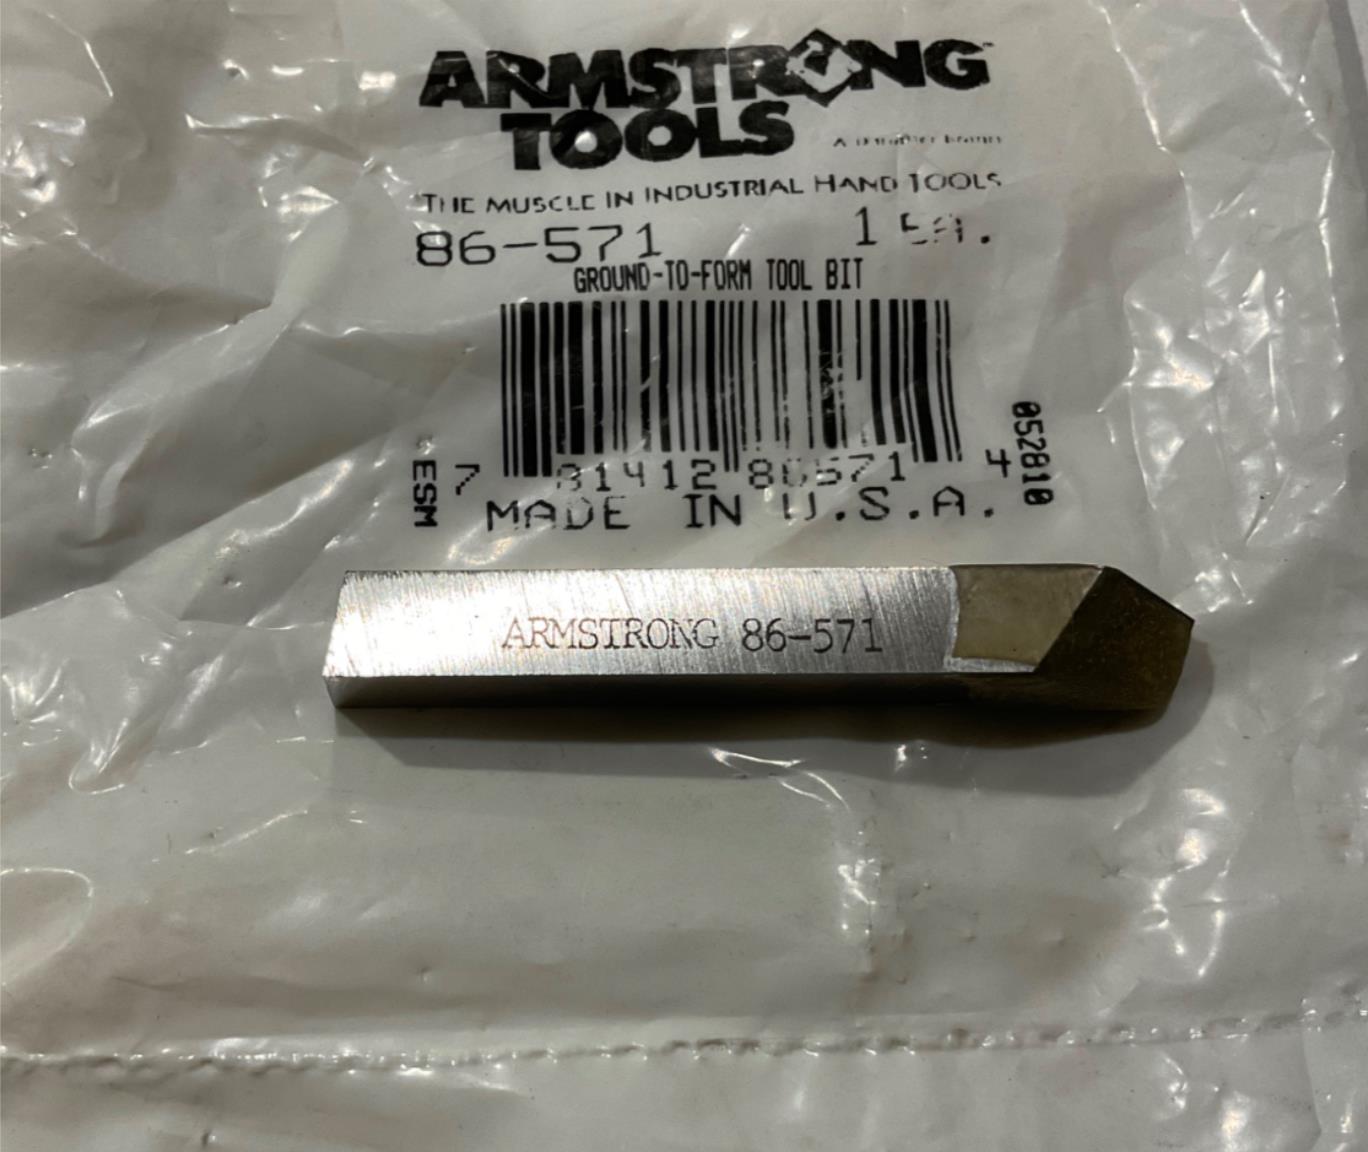 Armstrong 86-571 Ground-to-form Tool Bit USA